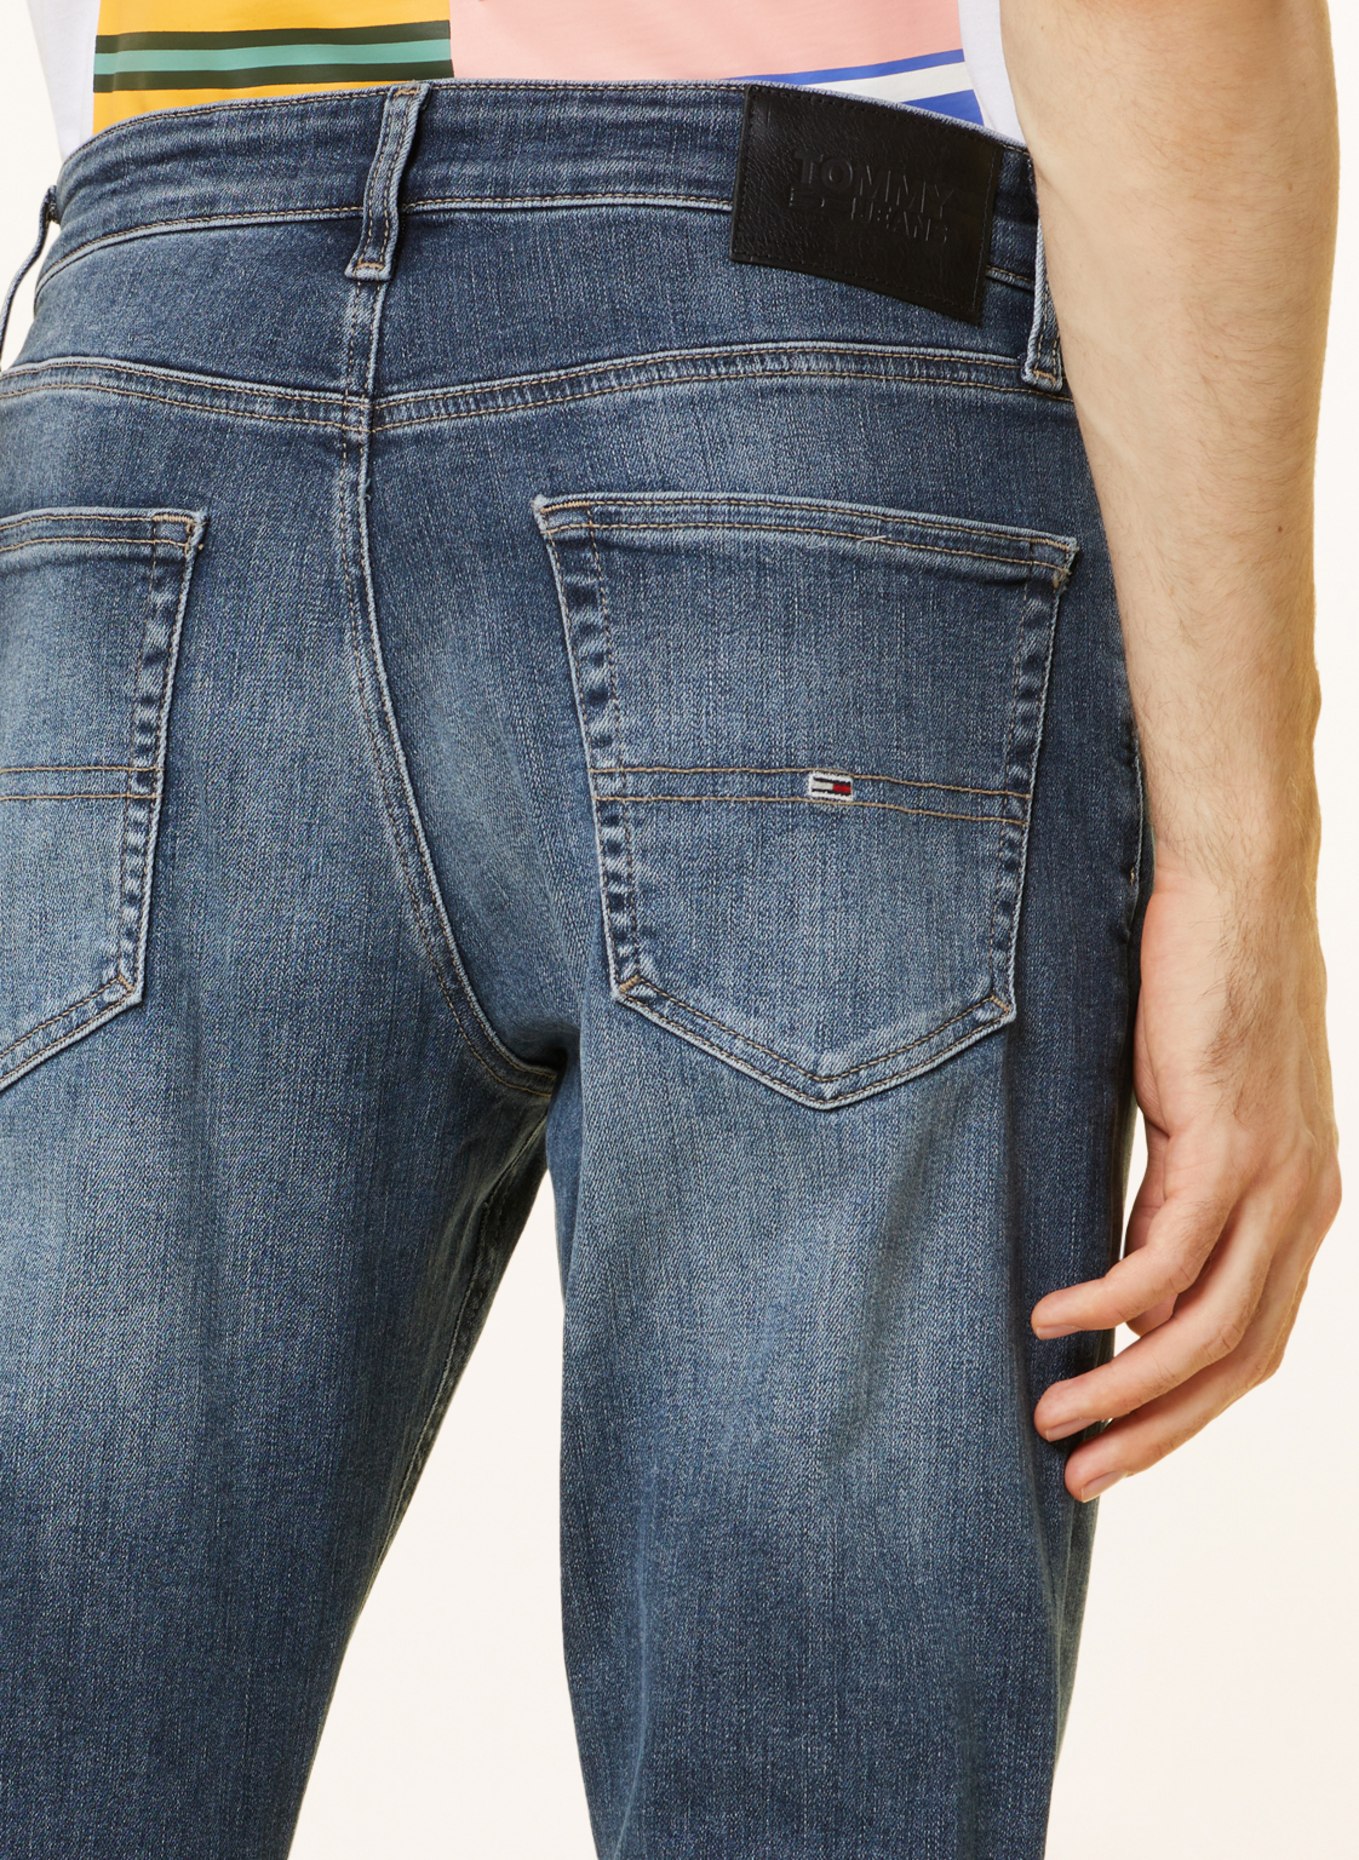 TOMMY JEANS Jeans AUSTIN Tapered Fit, Farbe: 1BK Denim Dark (Bild 6)